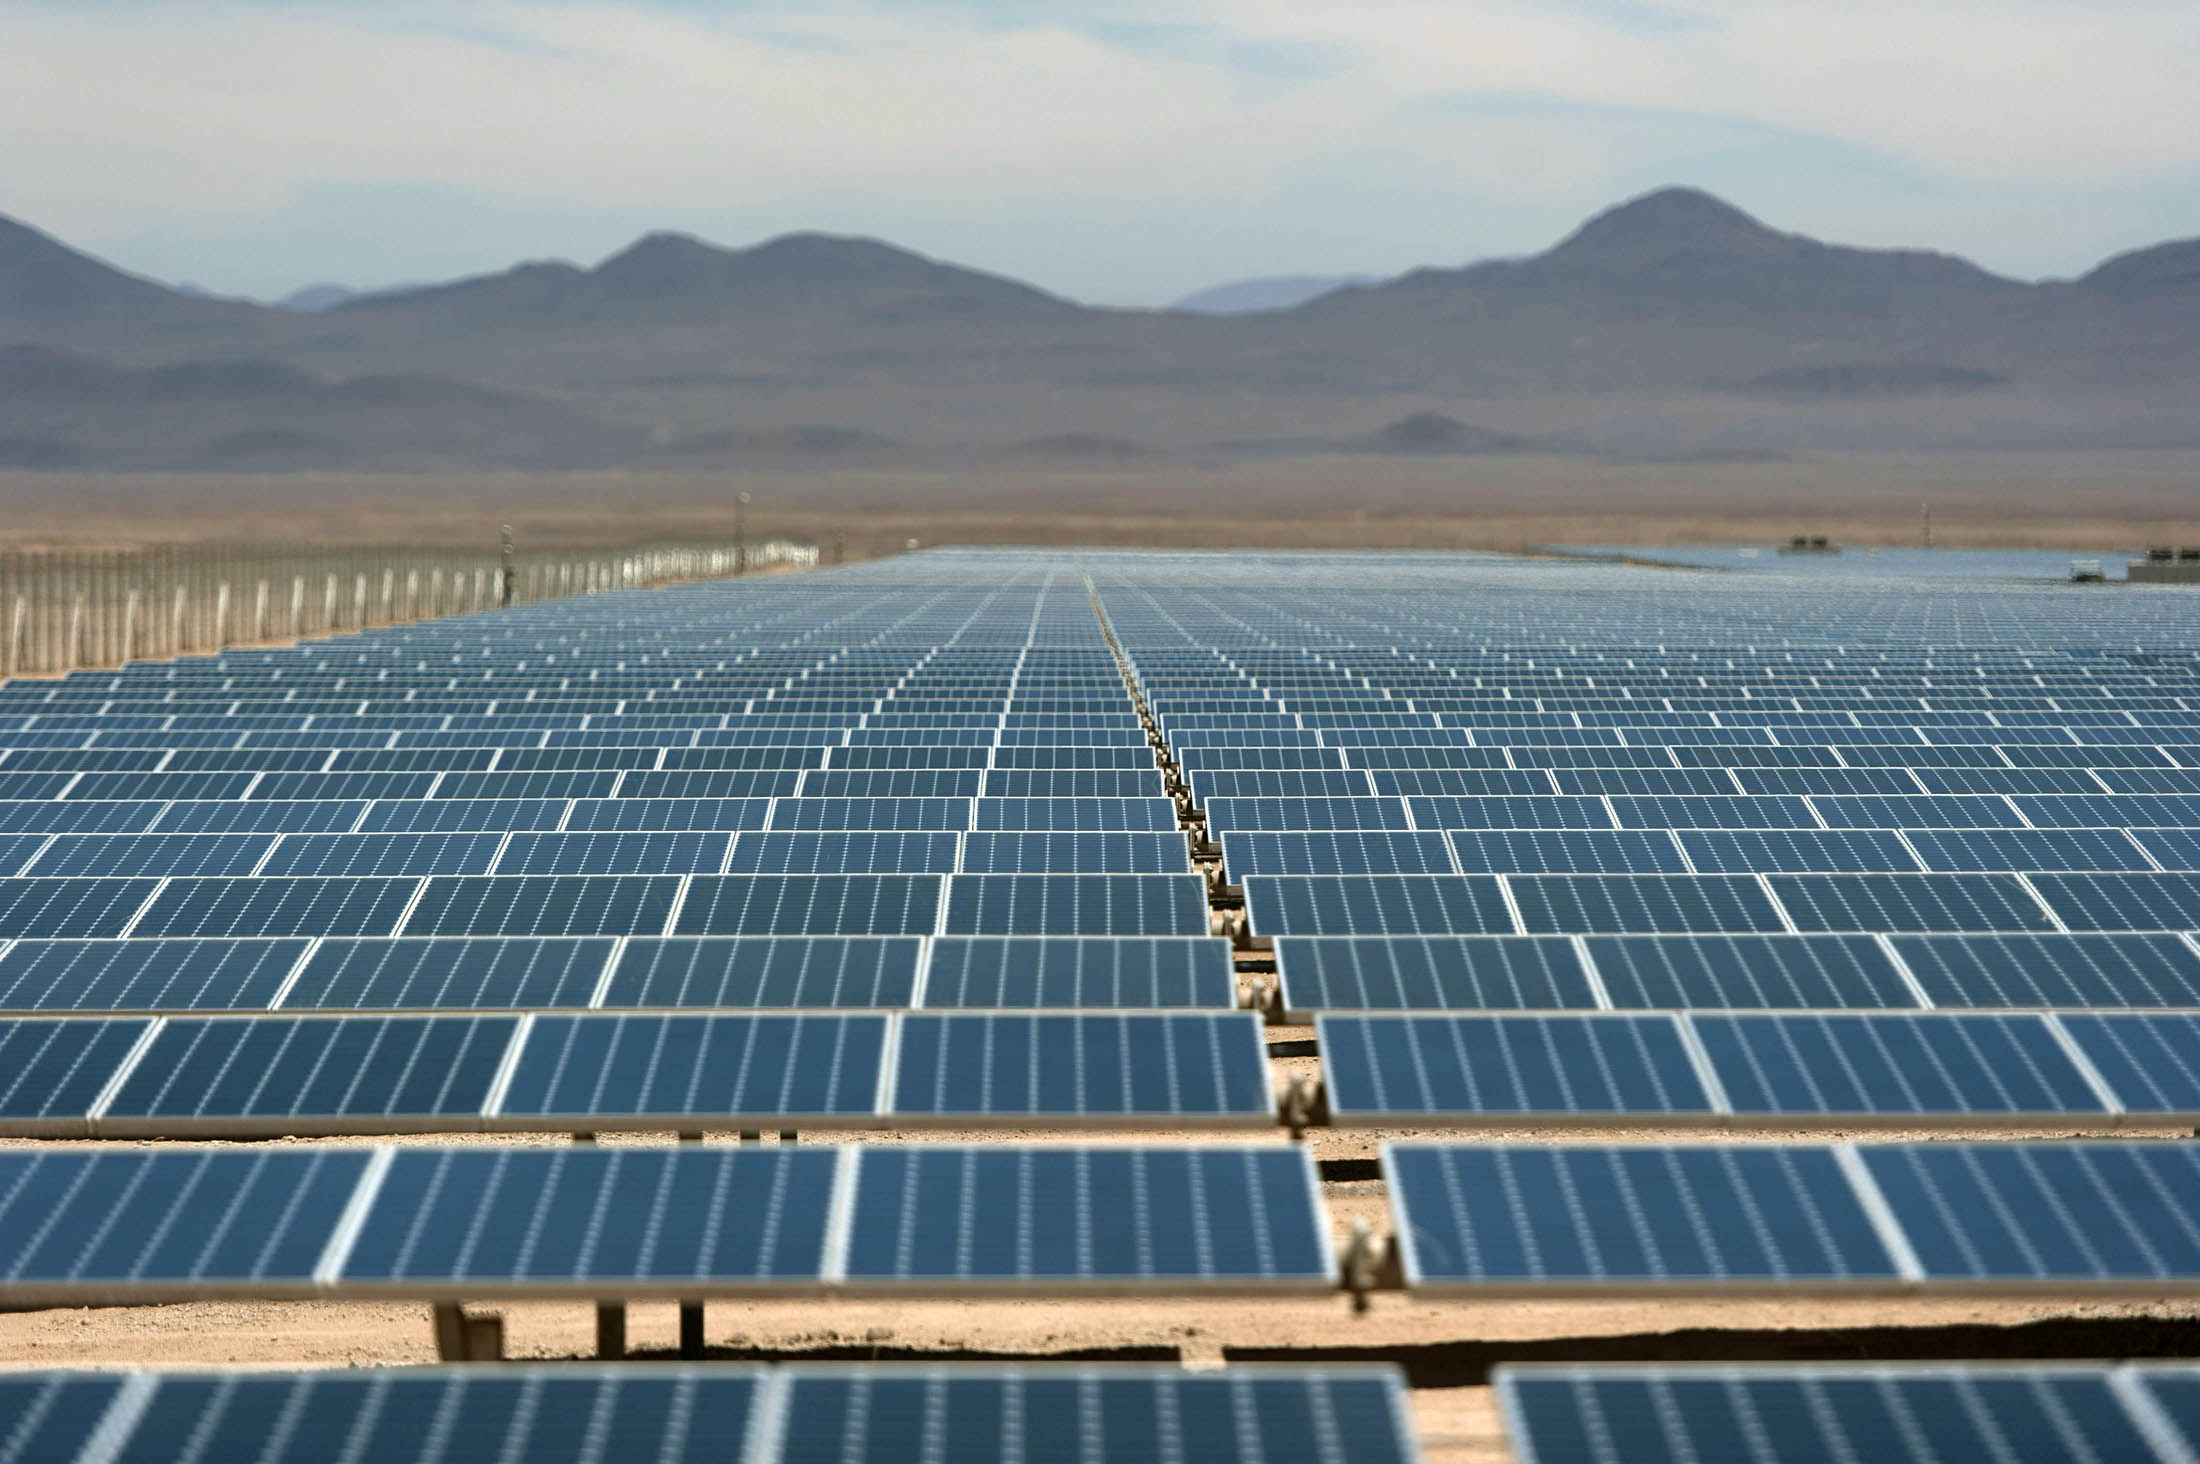 A solar farm in the Atacama desert, northern Chile.
